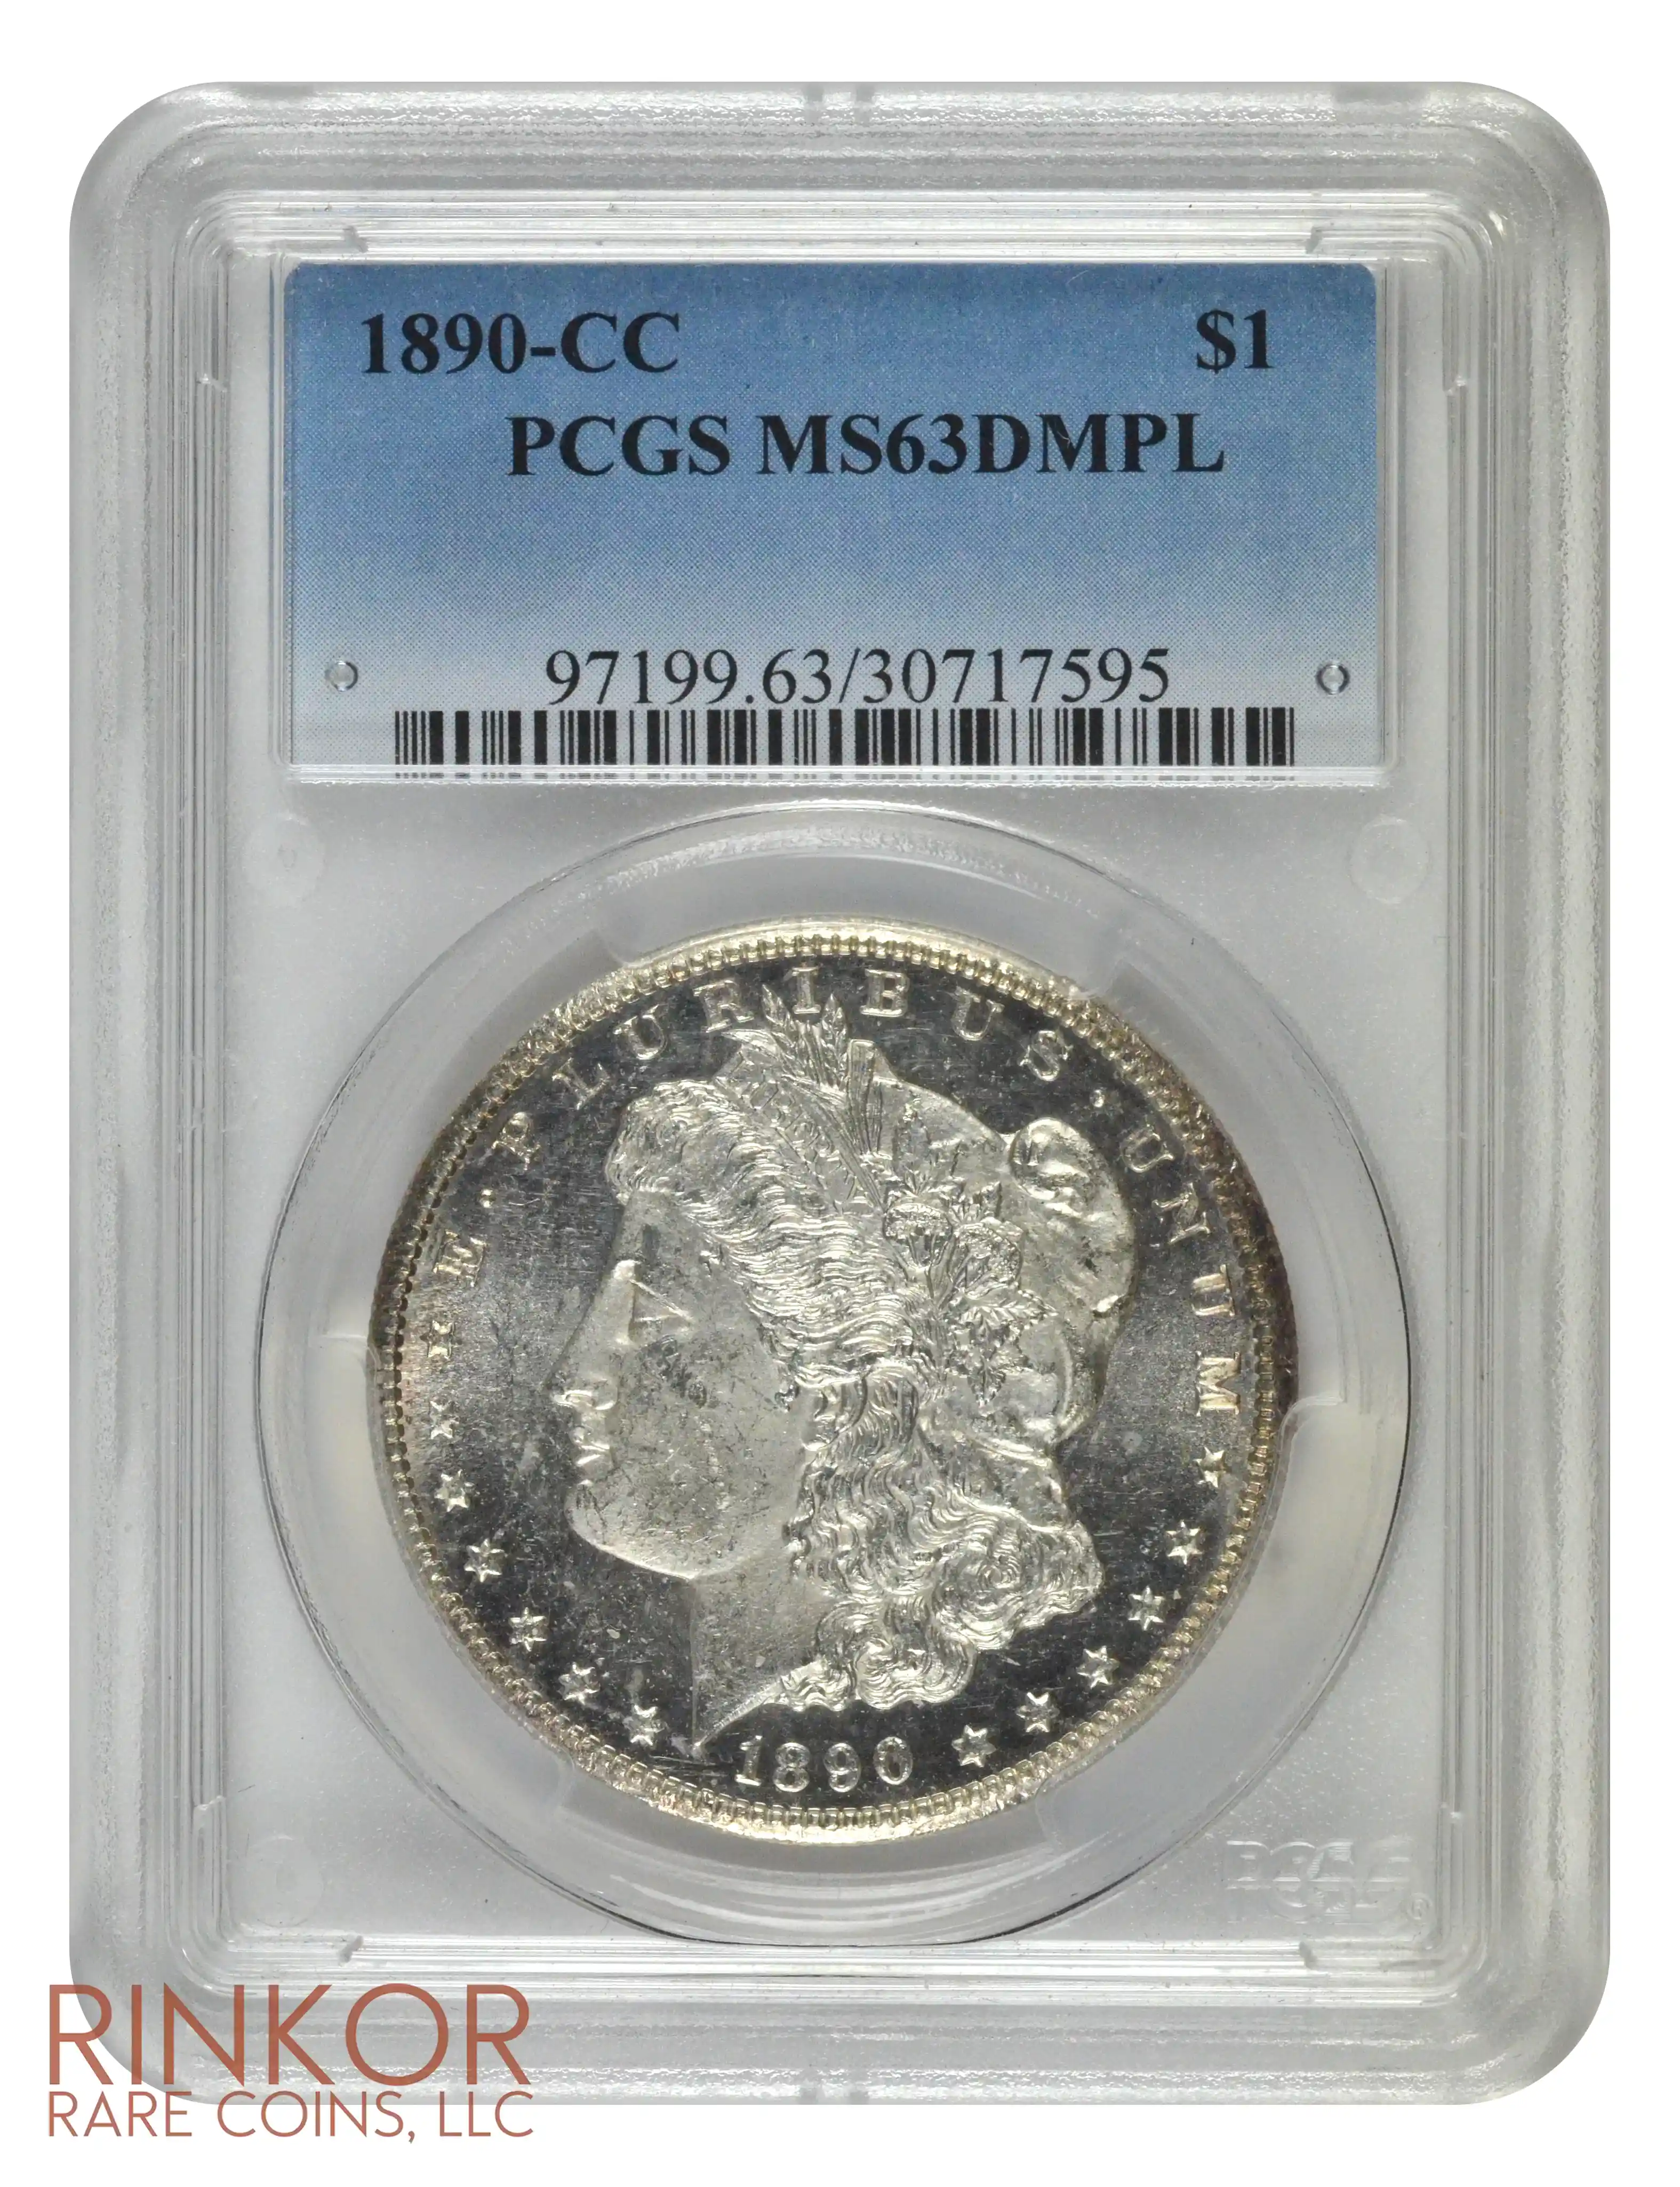 1890-CC $1 PCGS MS 63 DMPL